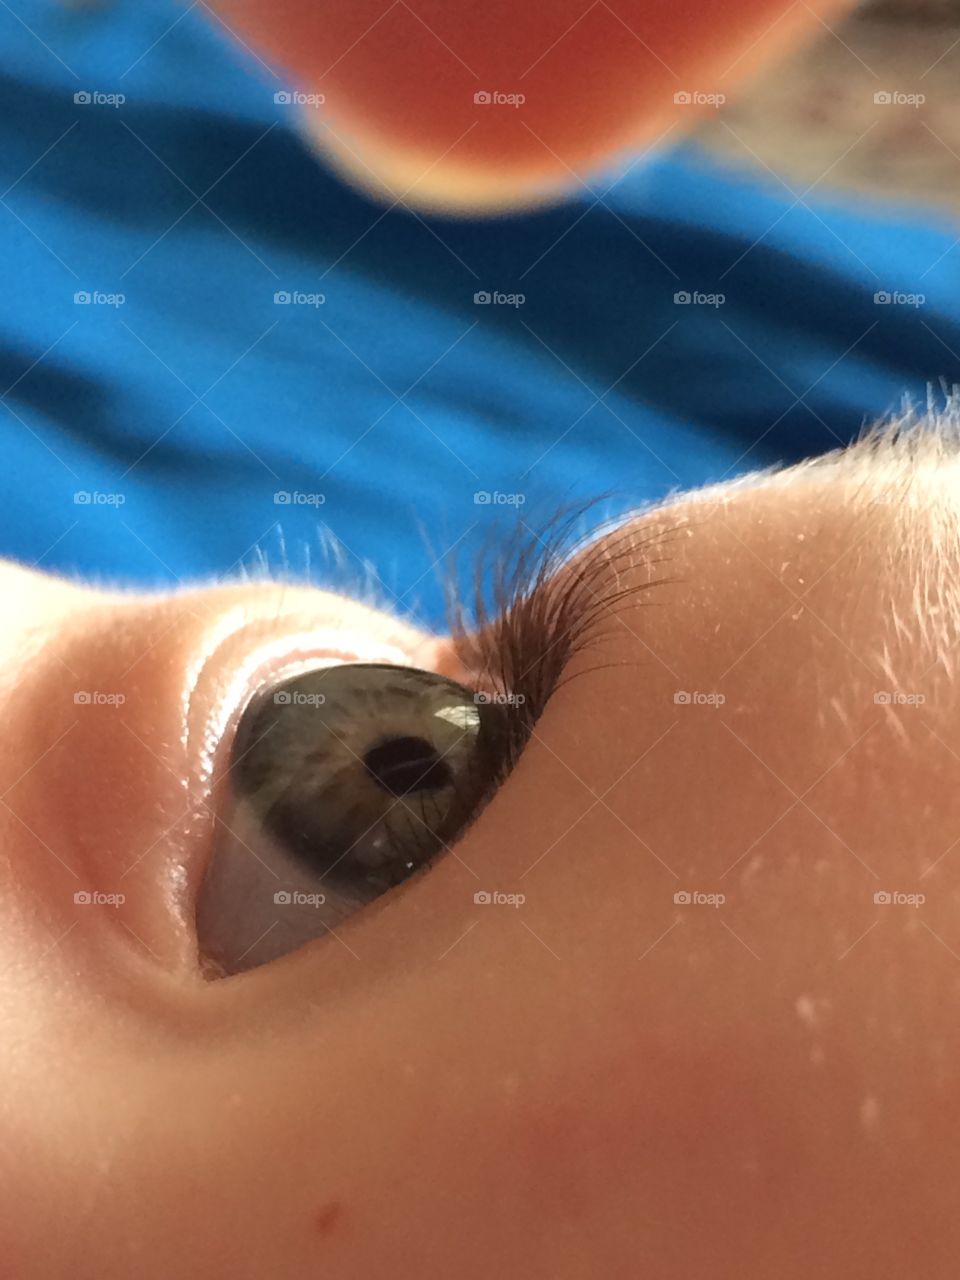 Baby's eye. Close up of child's eye 